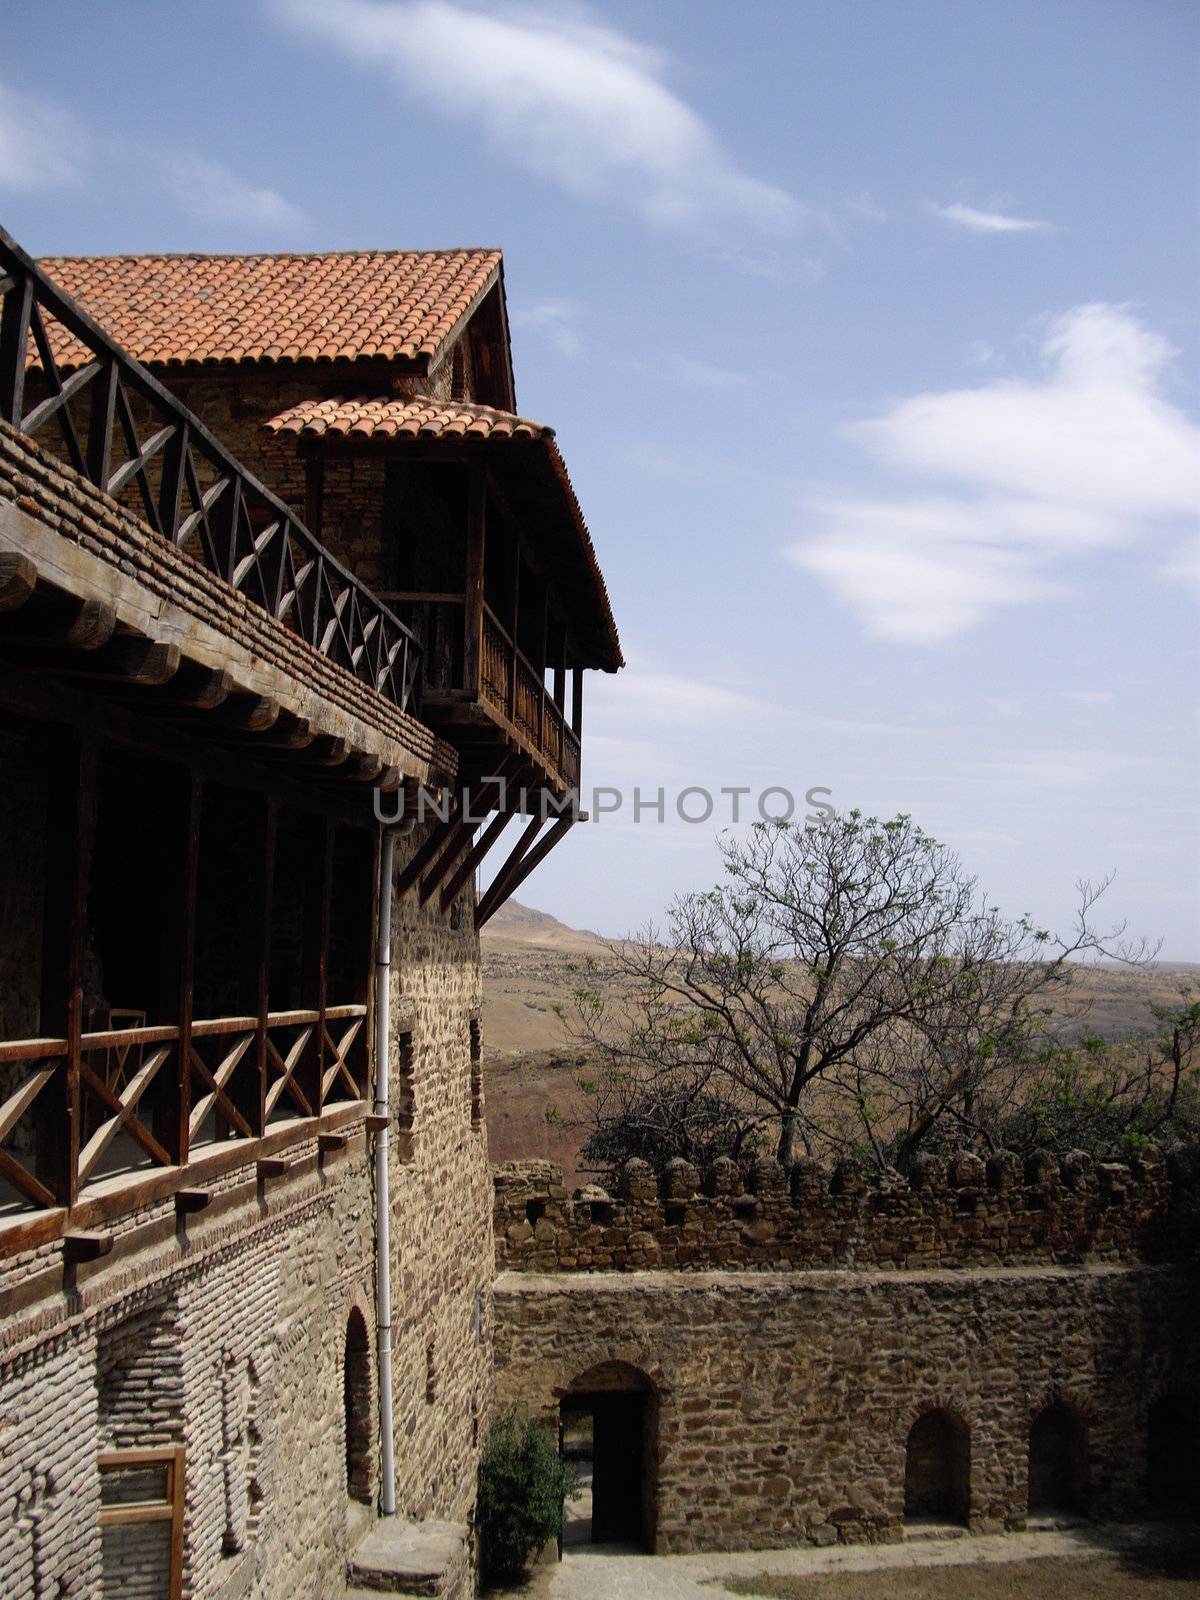 the orthodox monastery complex David Garedja on the border of Georgia and Azerbaijan